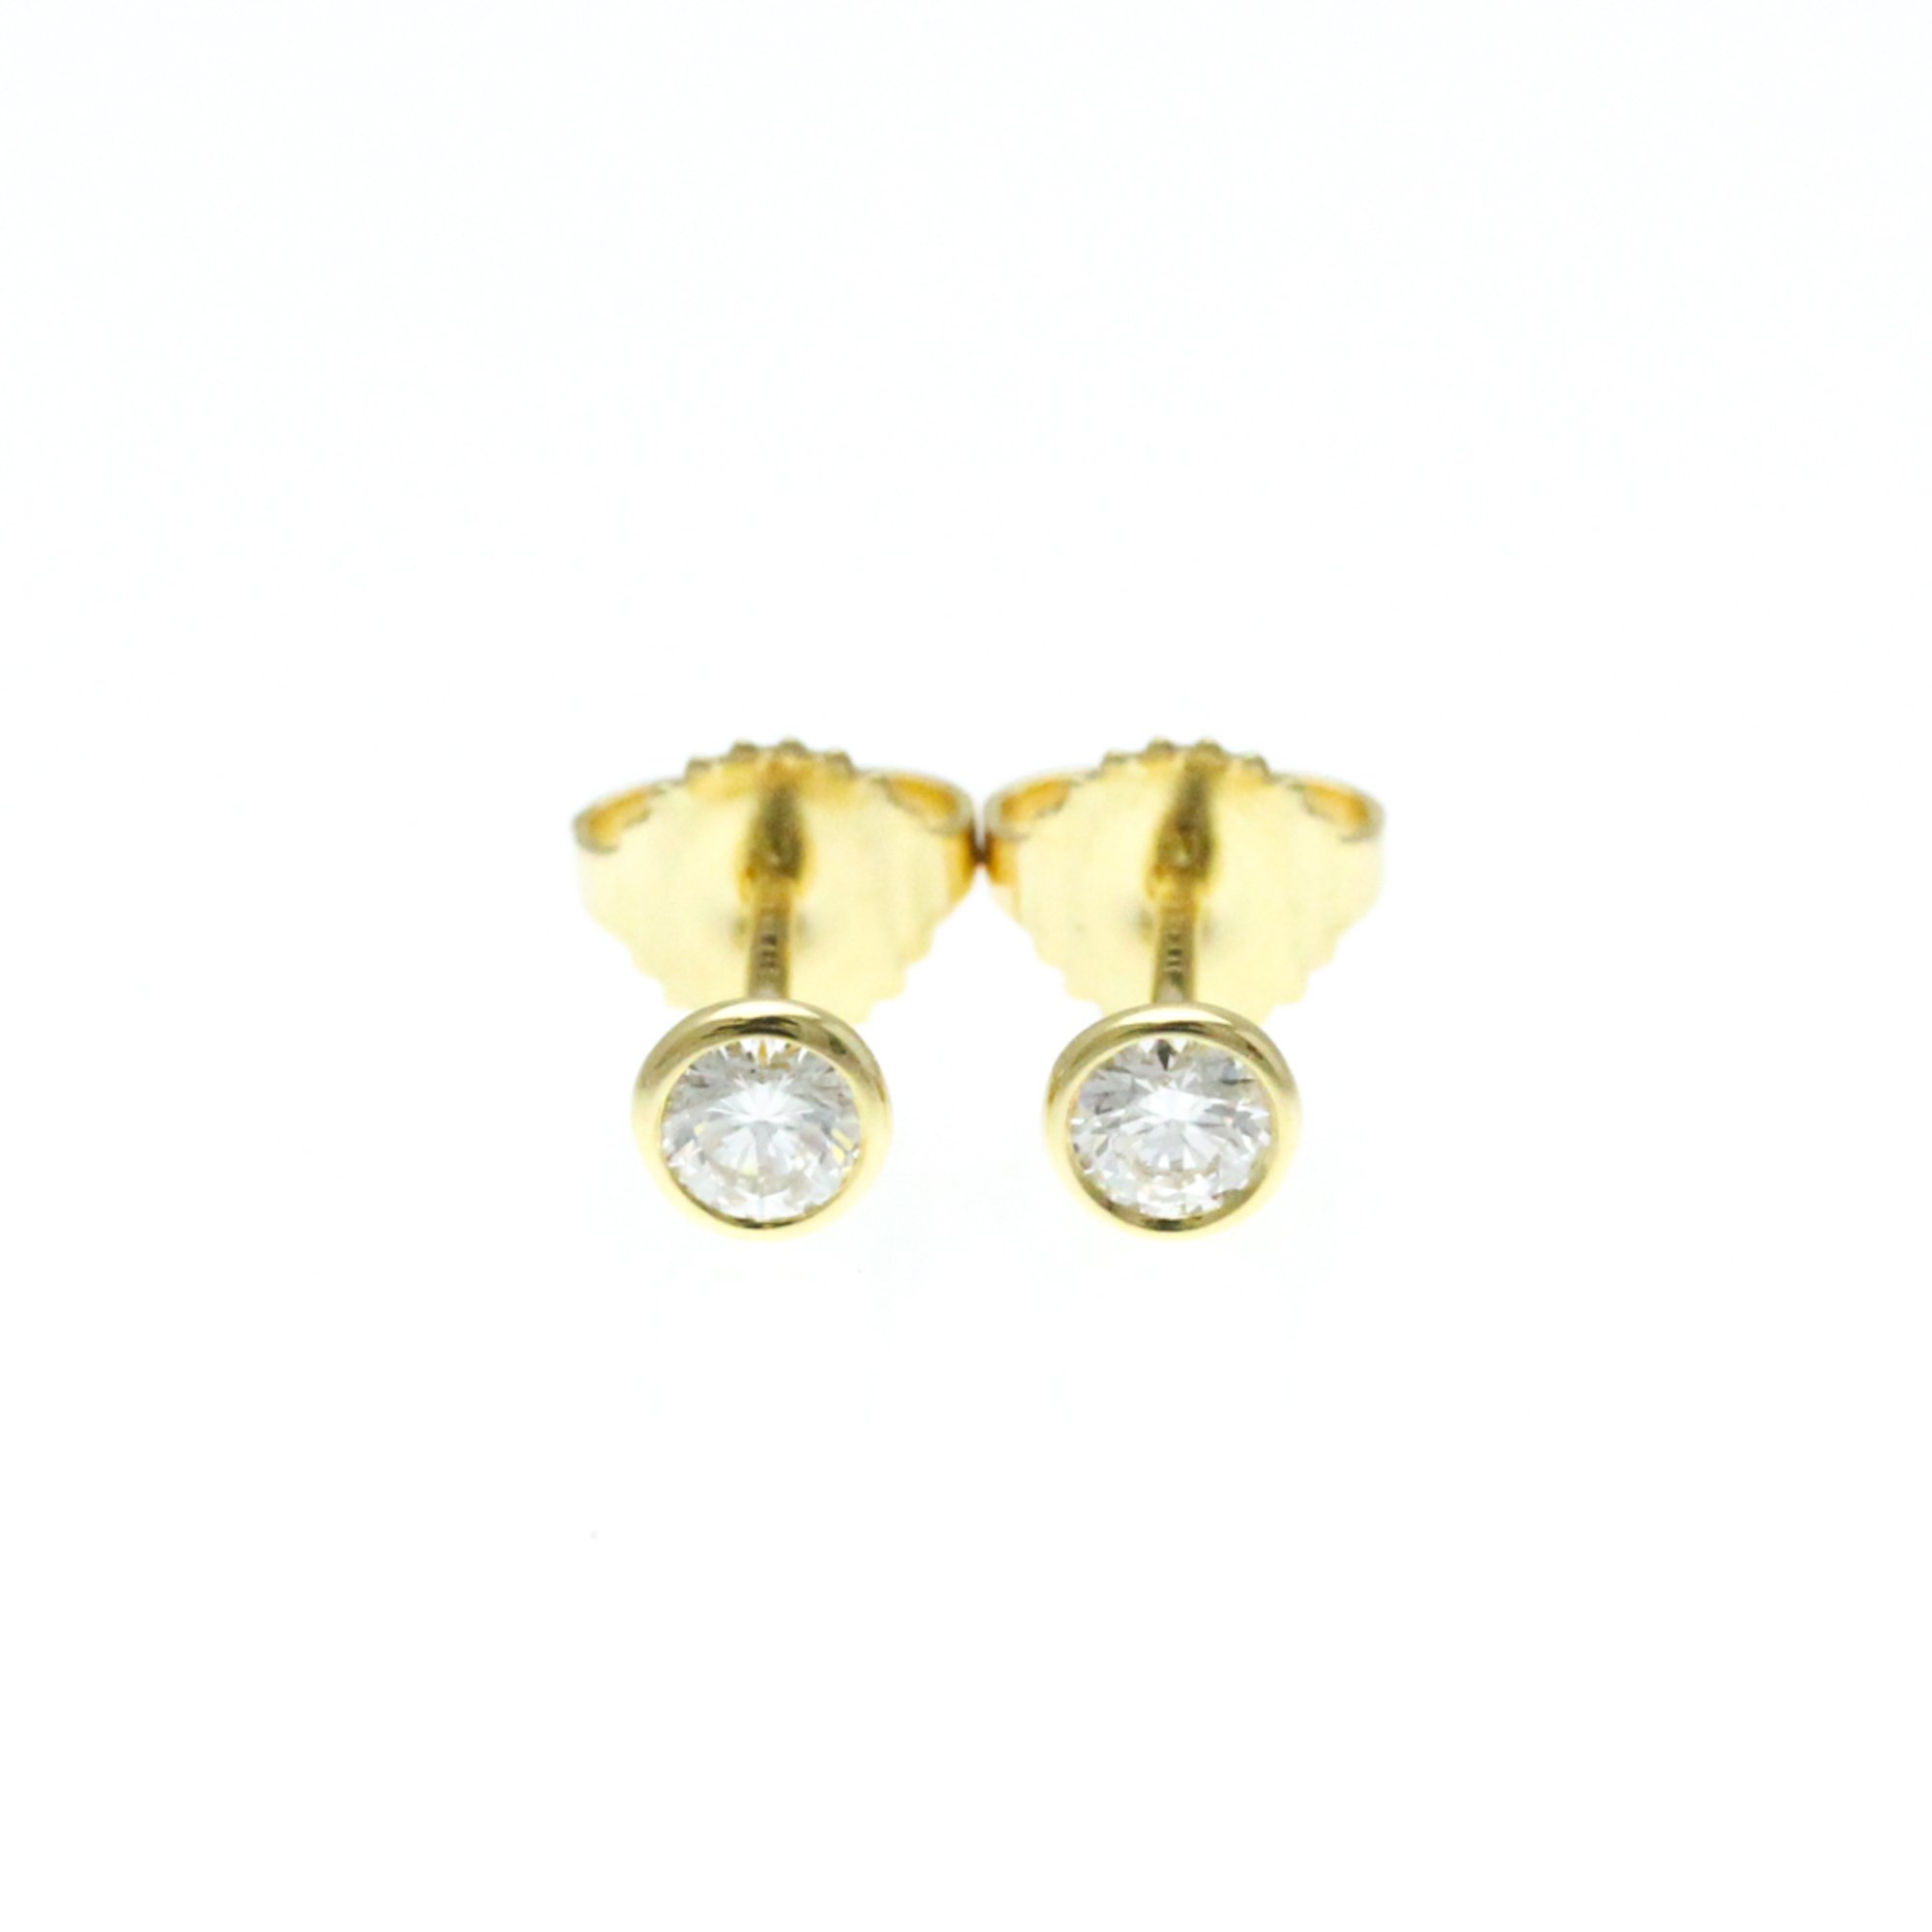 Tiffany Diamonds By The Yard Diamond Yellow Gold (18K) Stud Earrings Gold